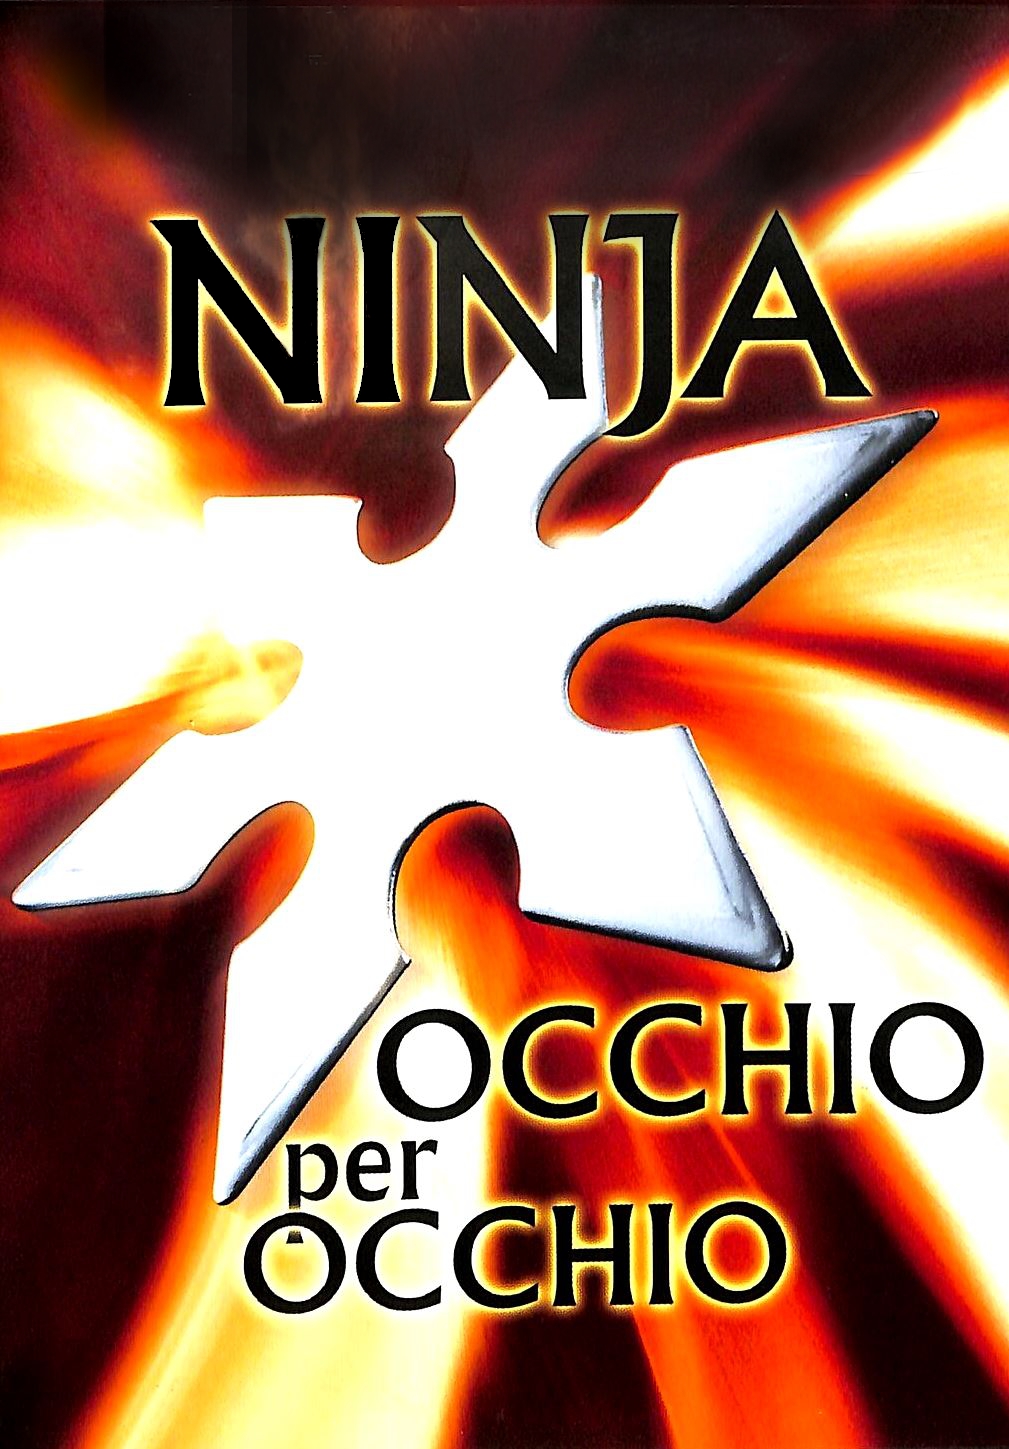 Ninja occhio per occhio (1987)